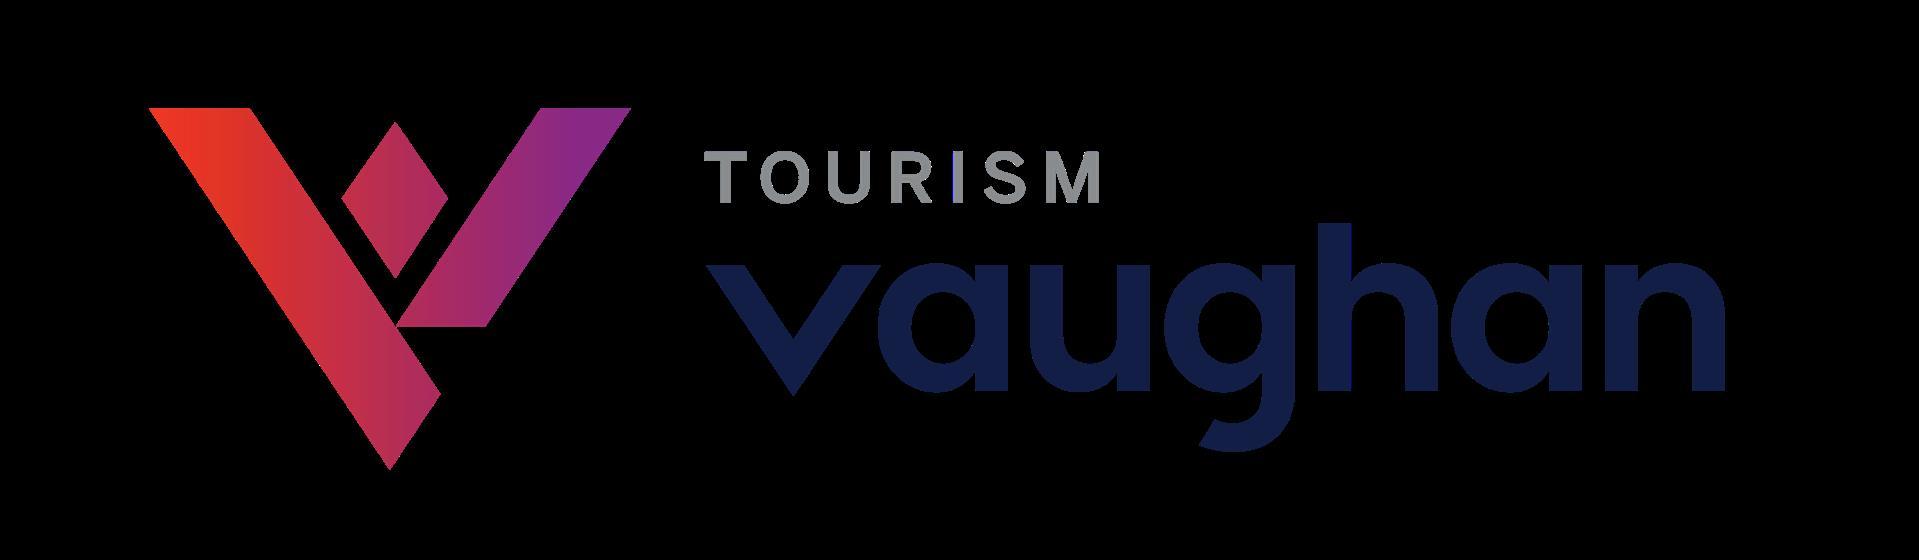 Tourism Vaughan in Vaughan, ON